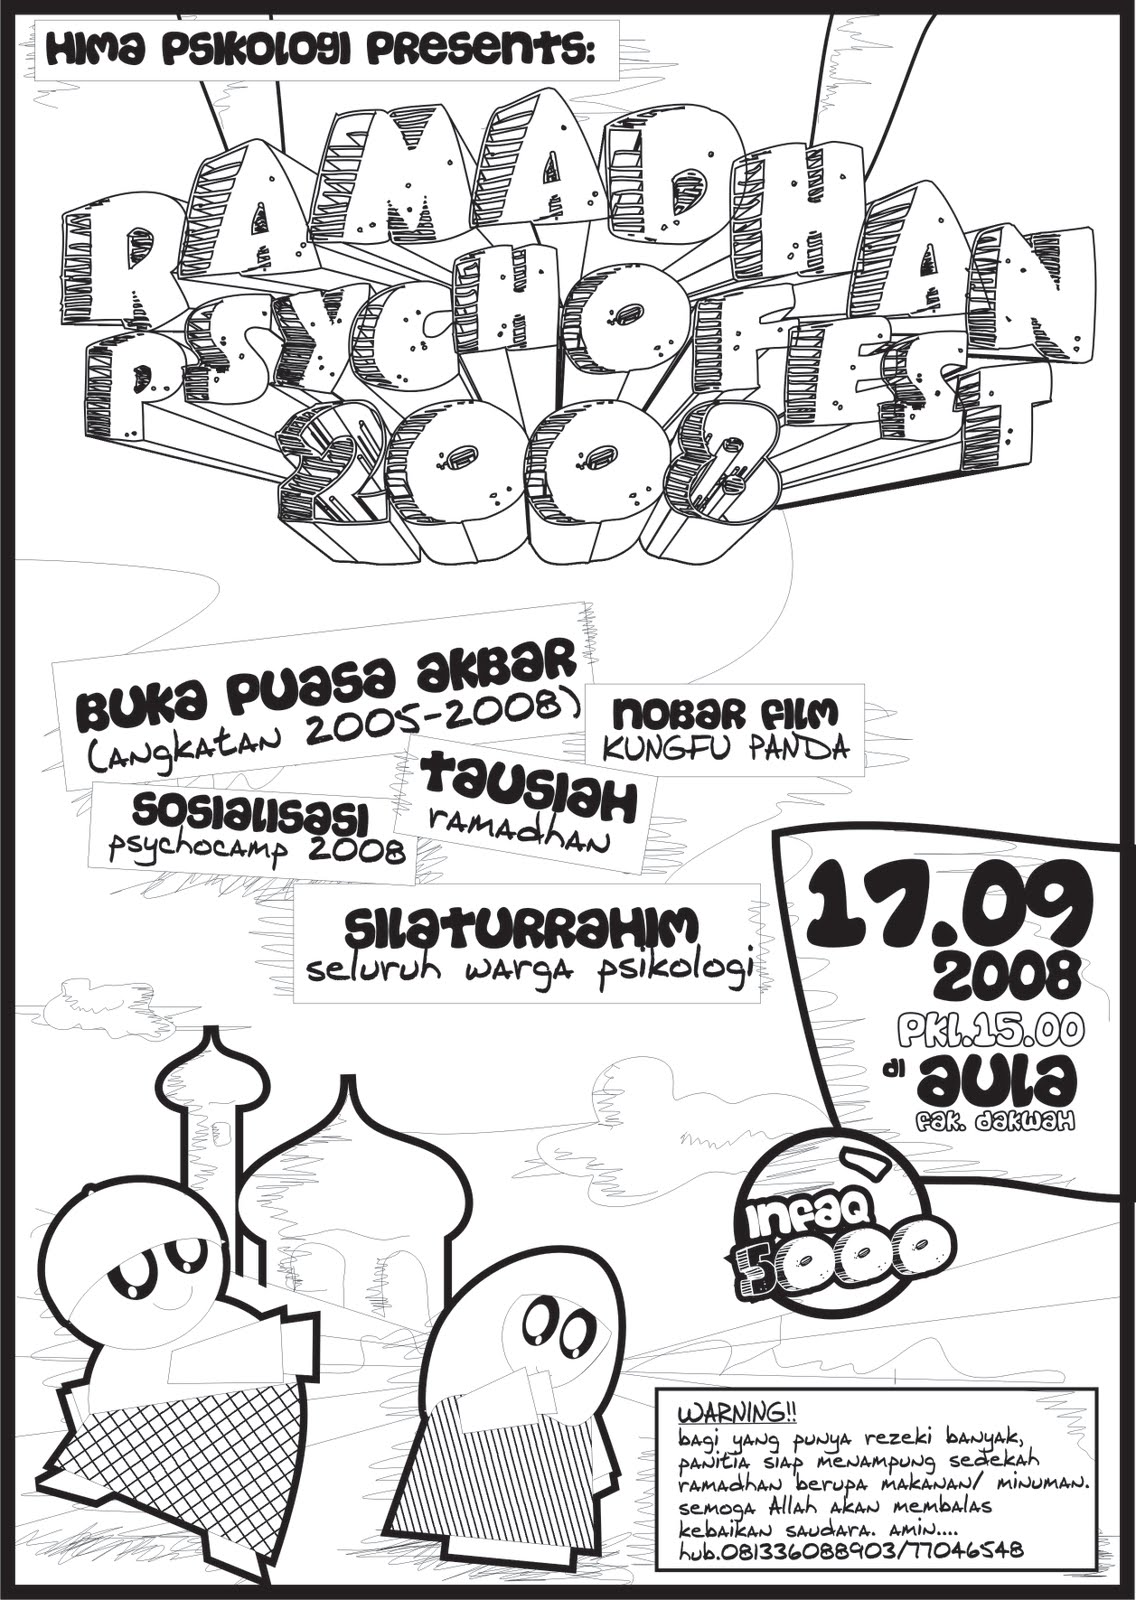 kreativa desain  Poster  Ramadhan  Psychofest 2008